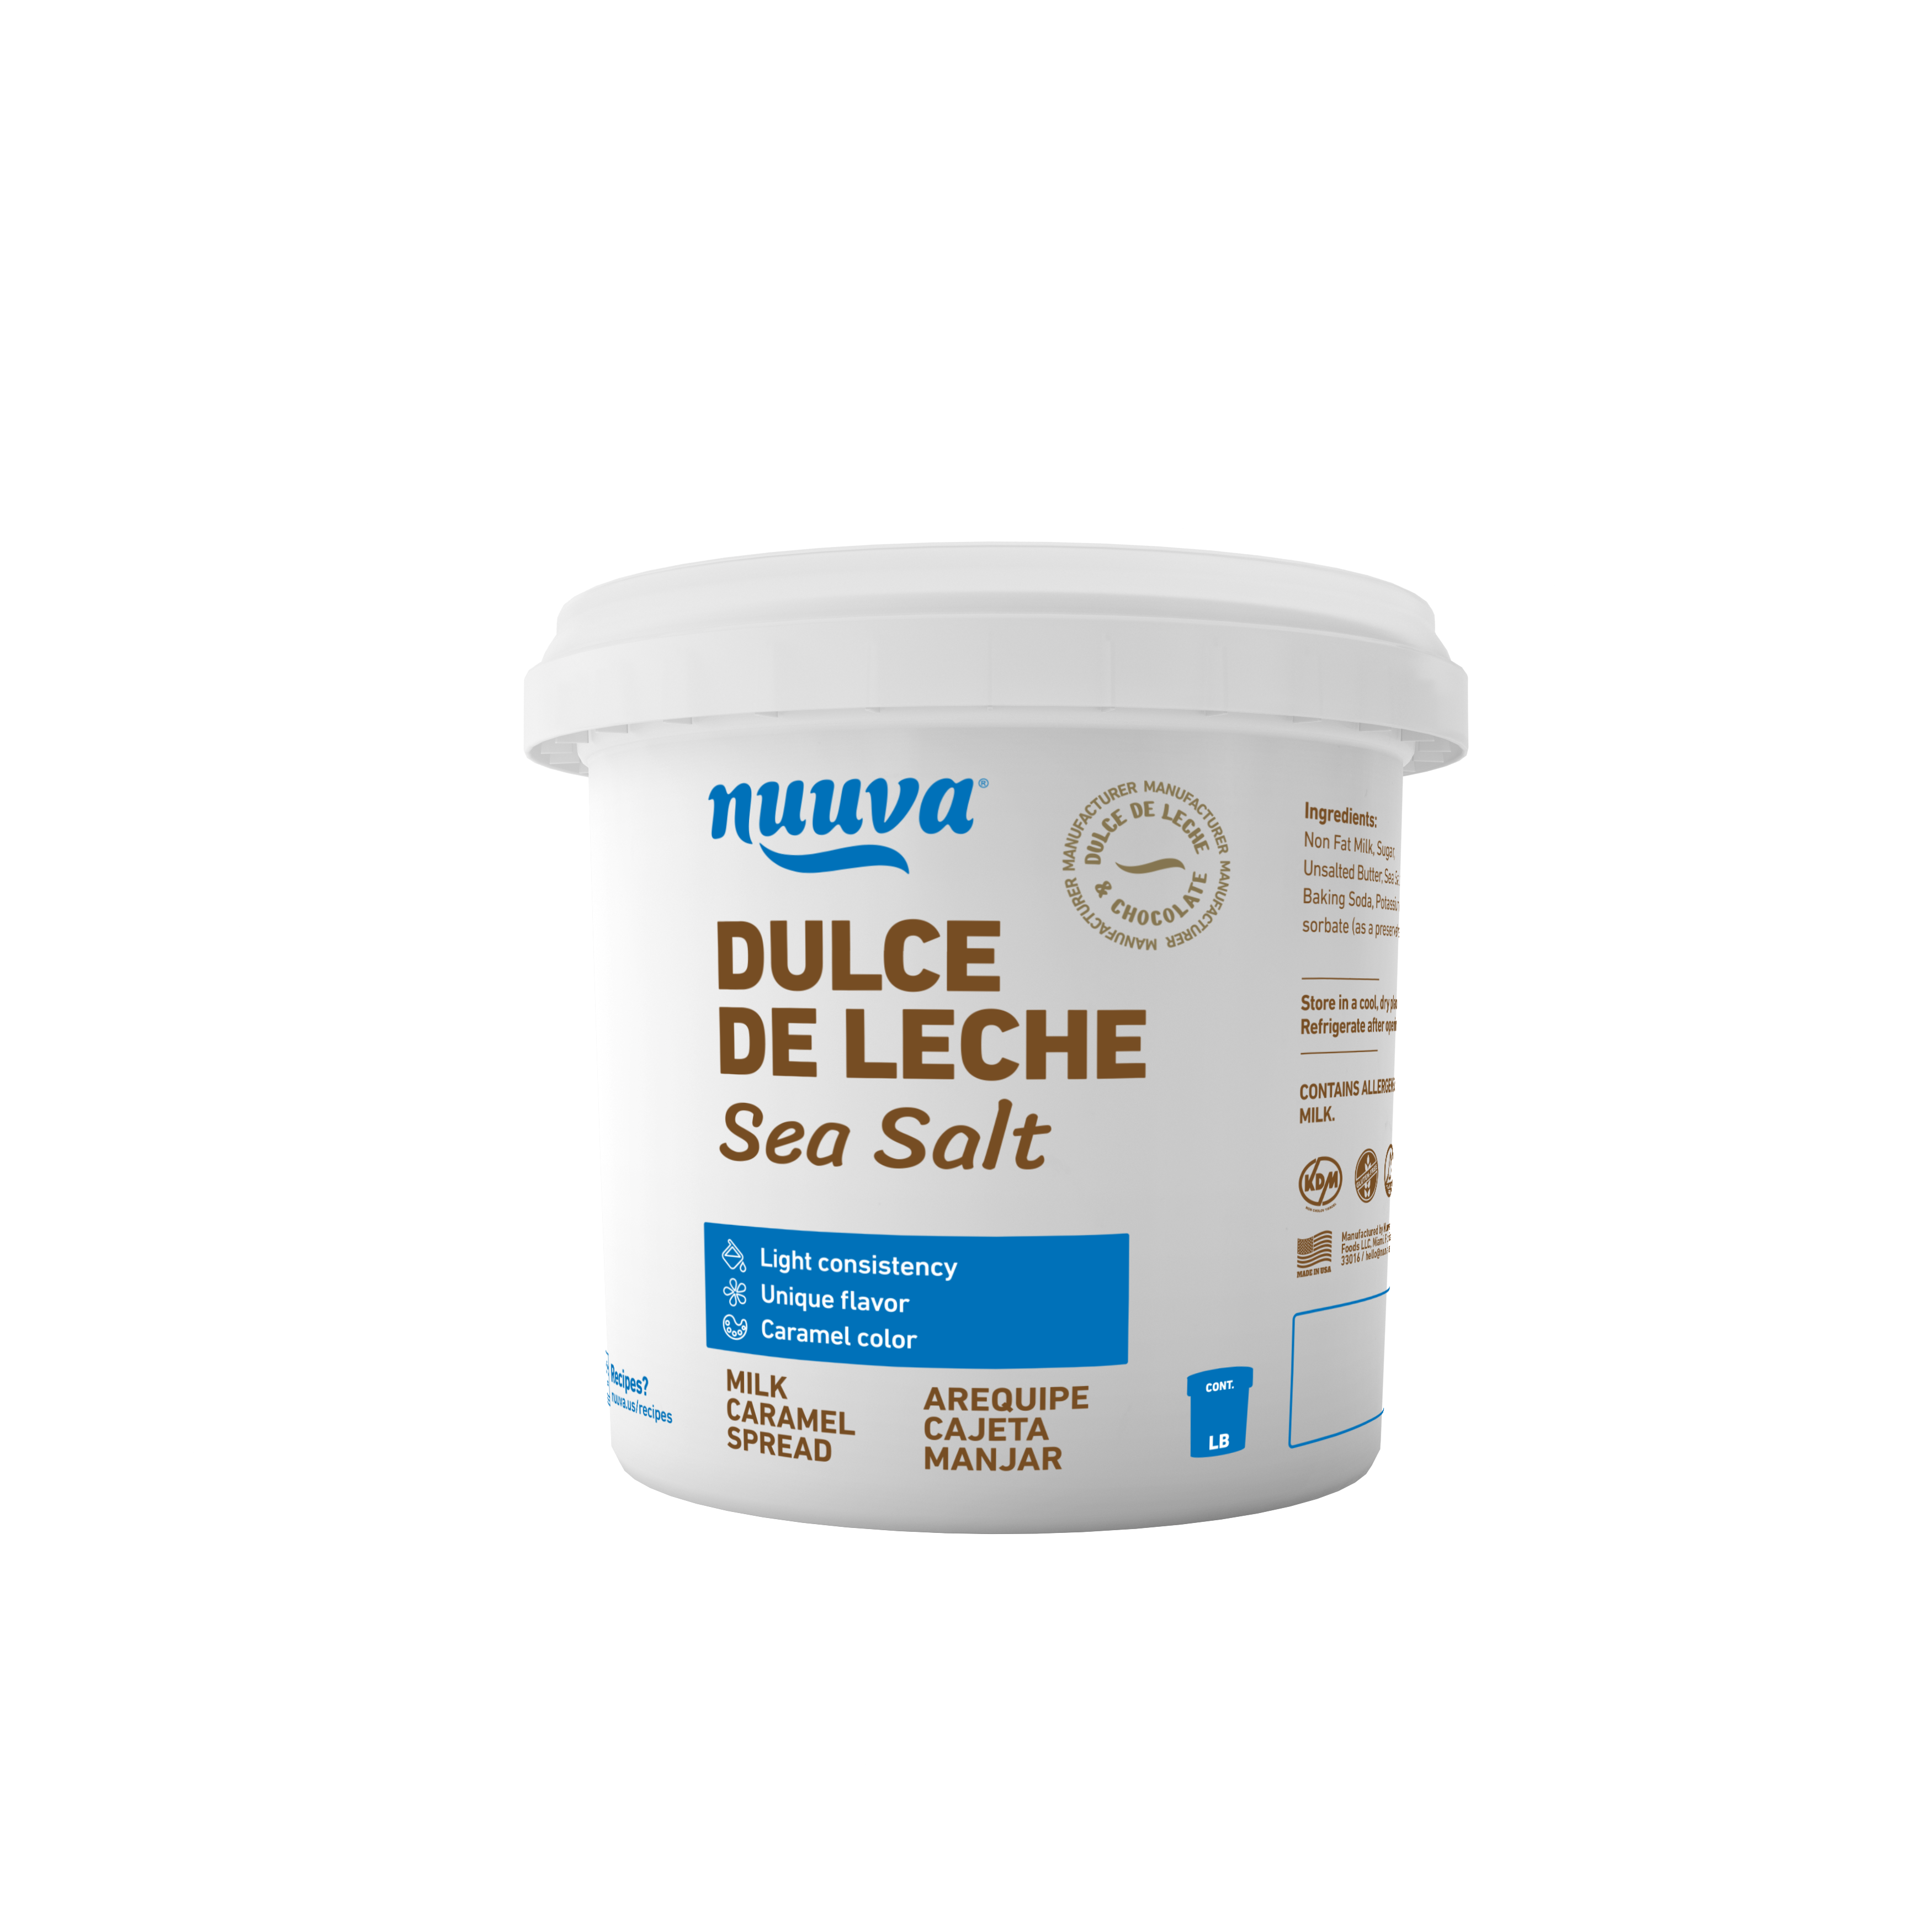 Sea Salt Dulce de Leche Premium